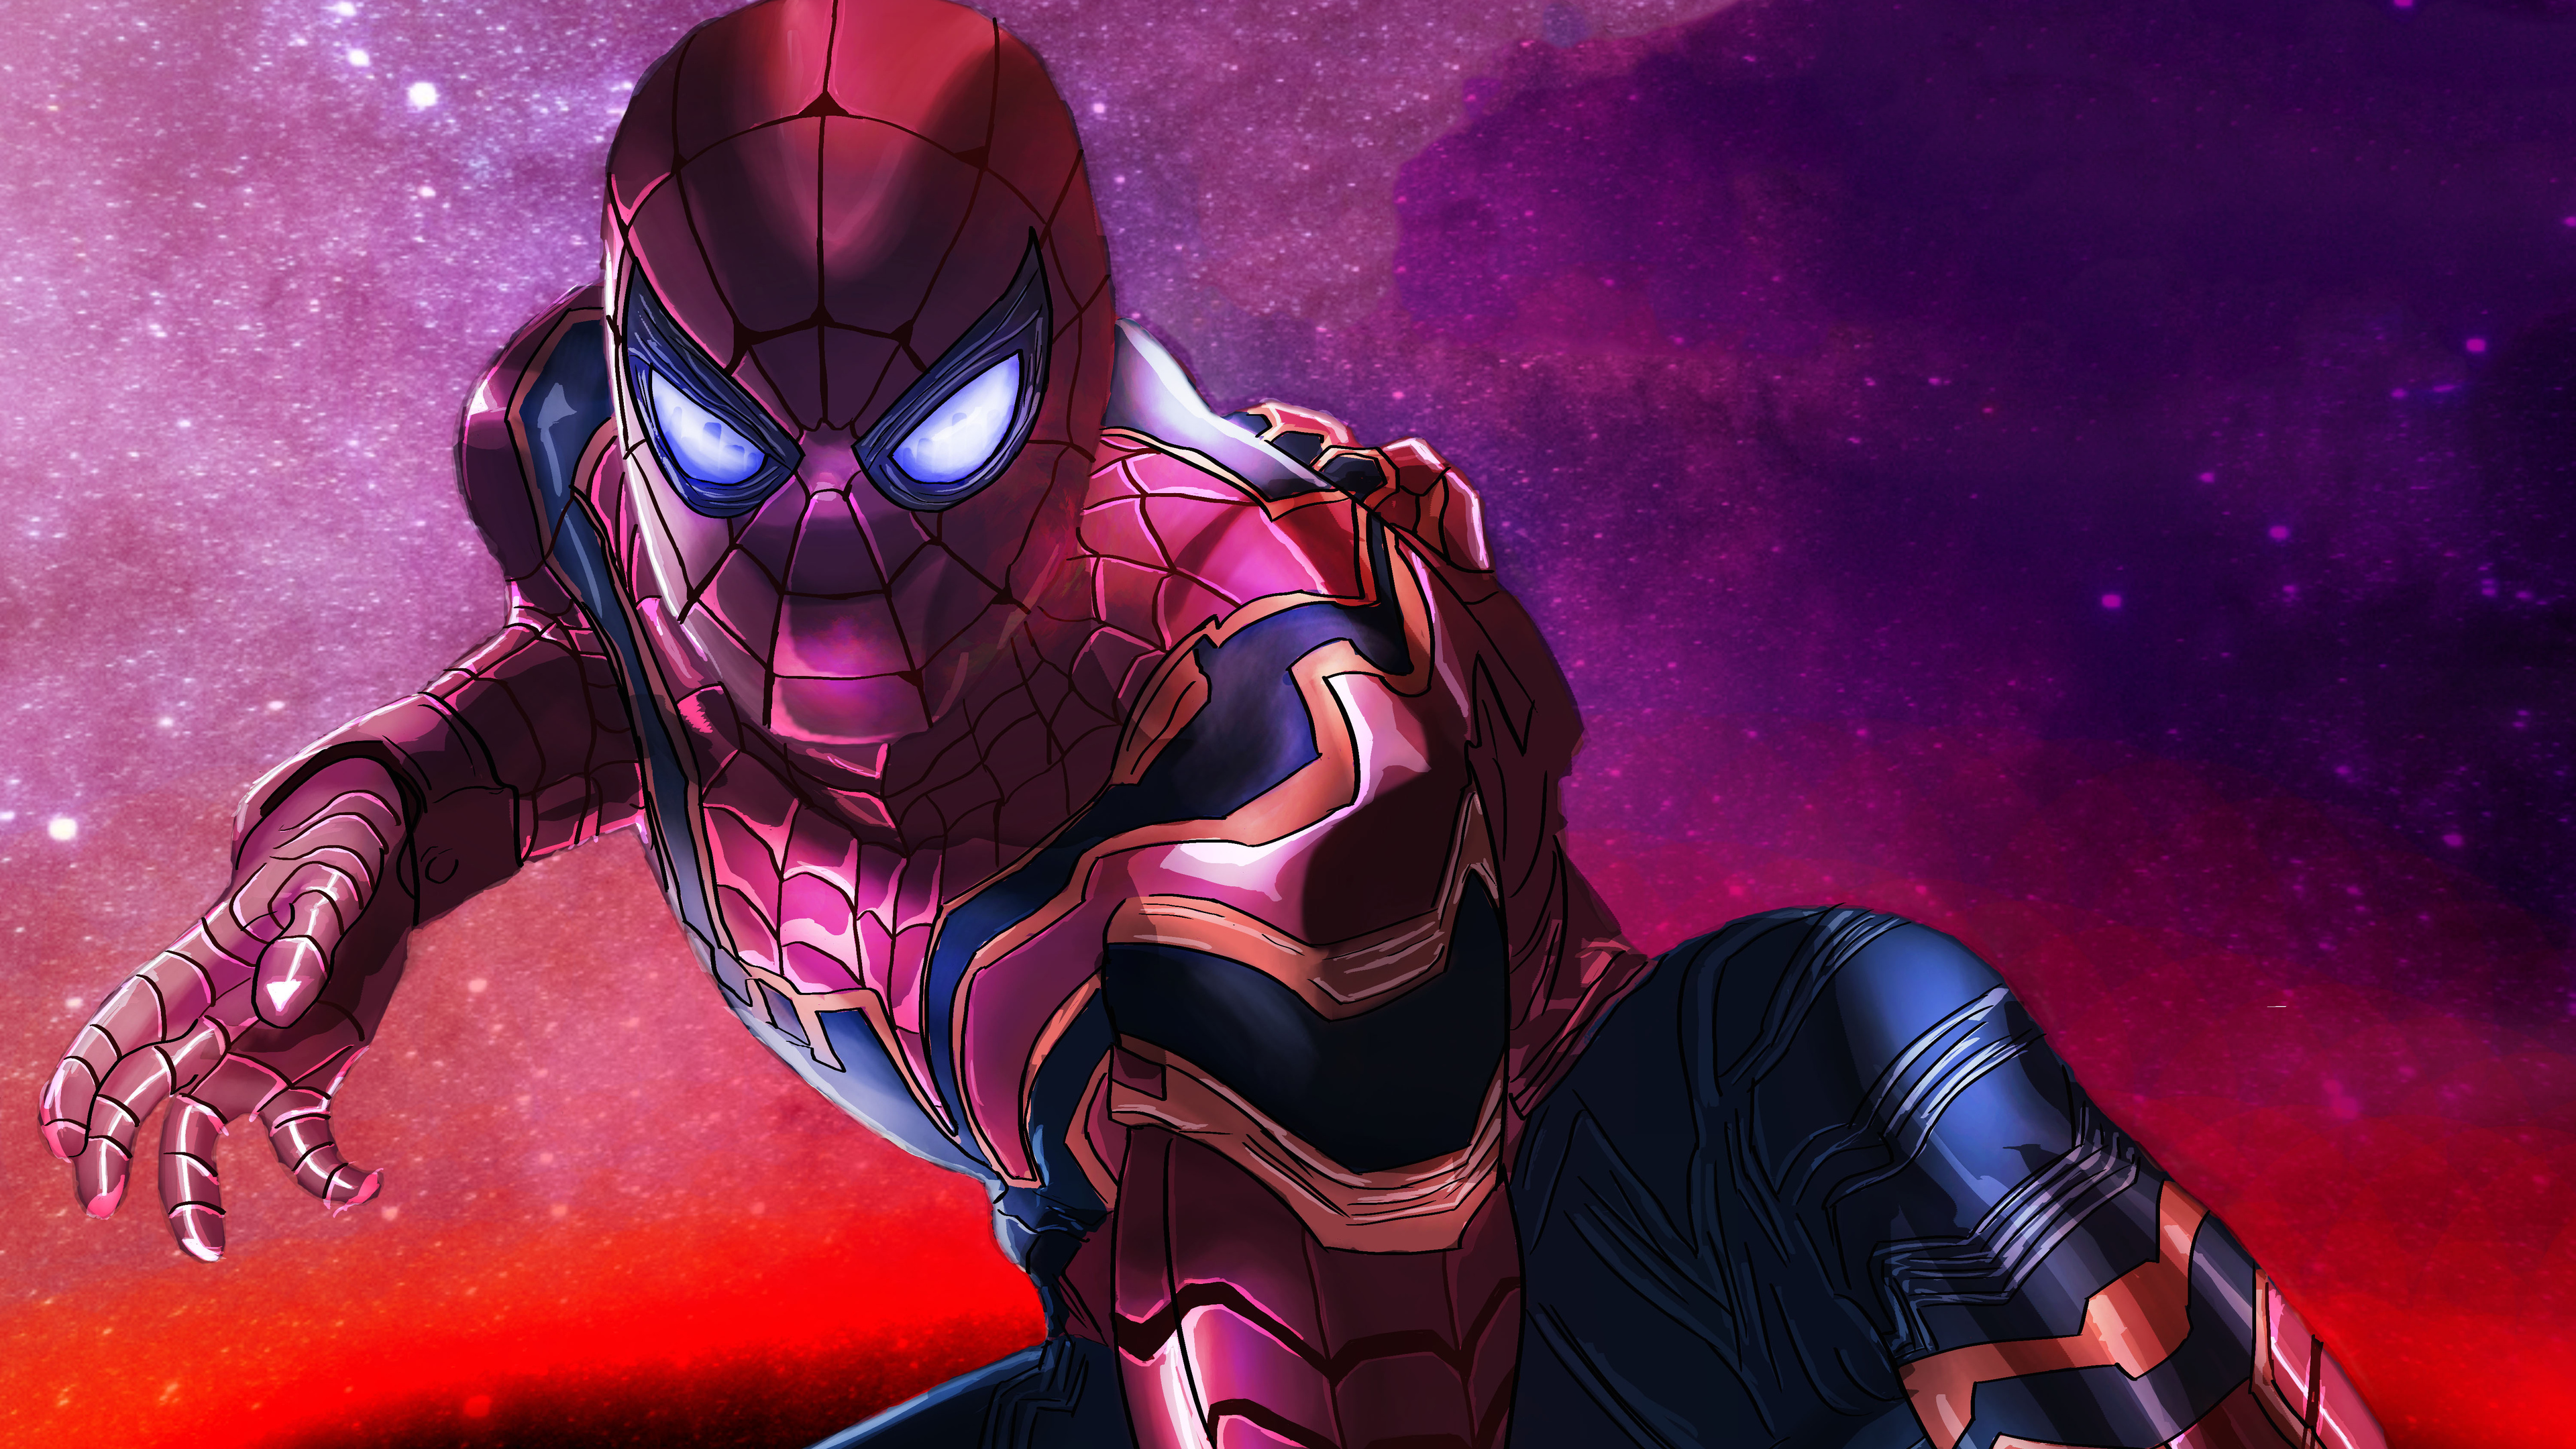 Wallpaper 4k Spiderman 4k Avengers Infinity War 4k Wallpapers